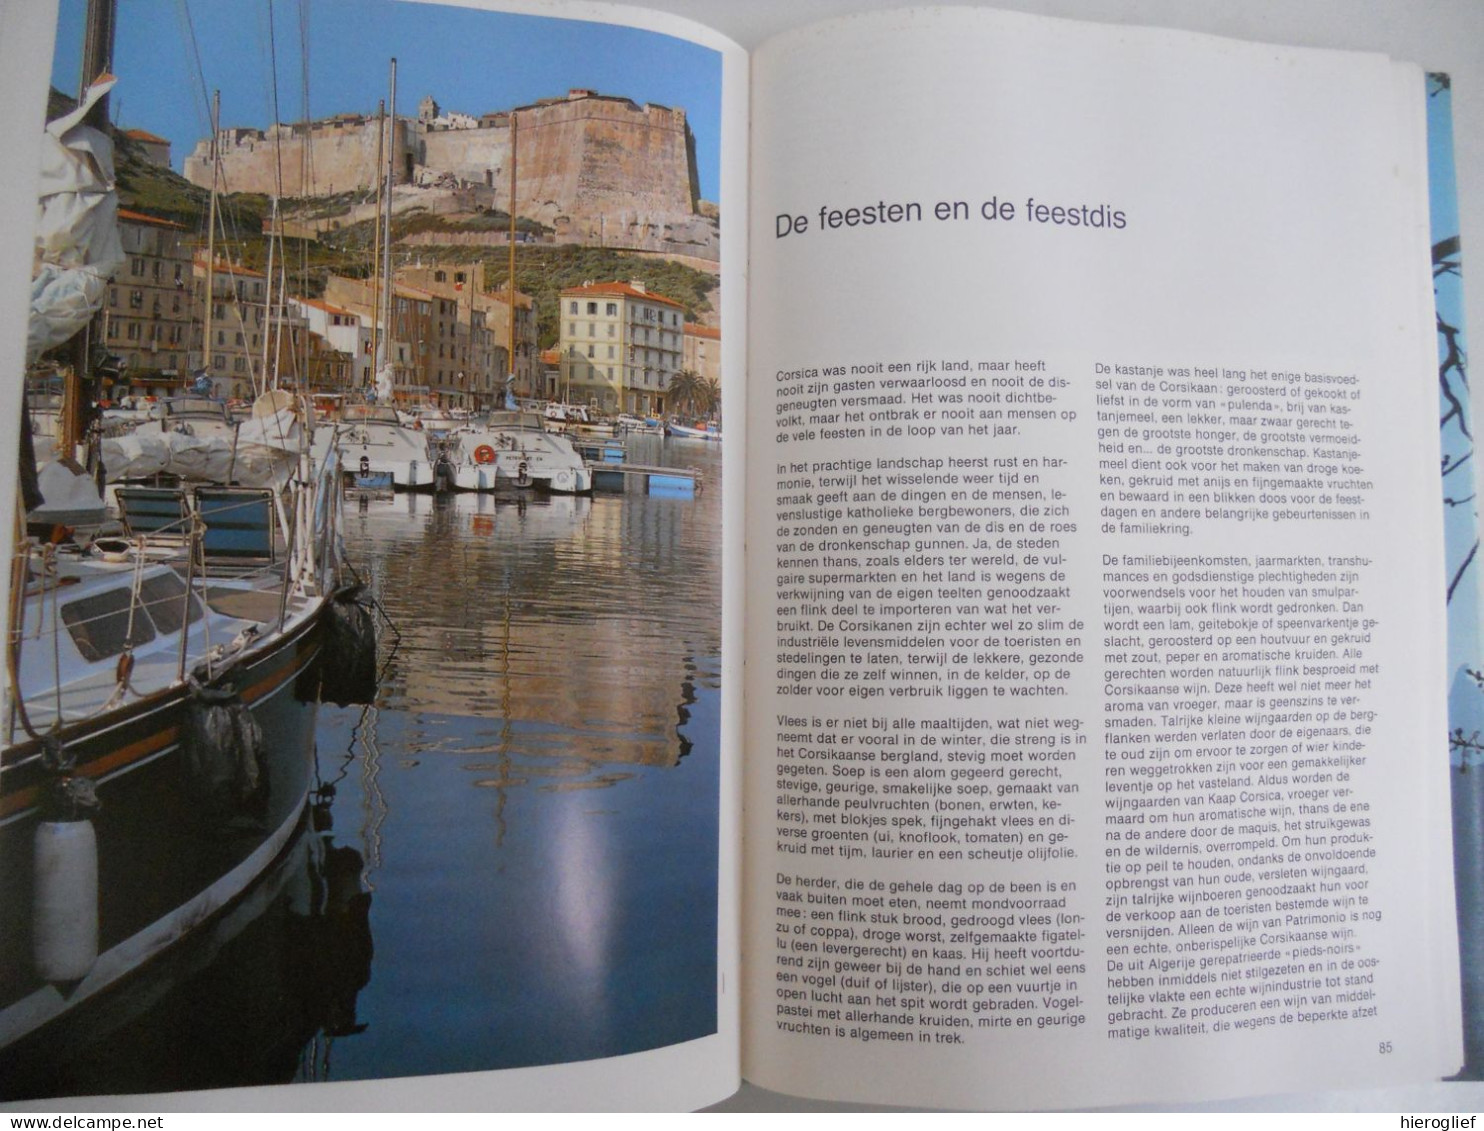 Corsica en Sardinië - Album Artis Historia compleet met alle chromo's Middellandse Zee natuur cultuur architectuur kunst